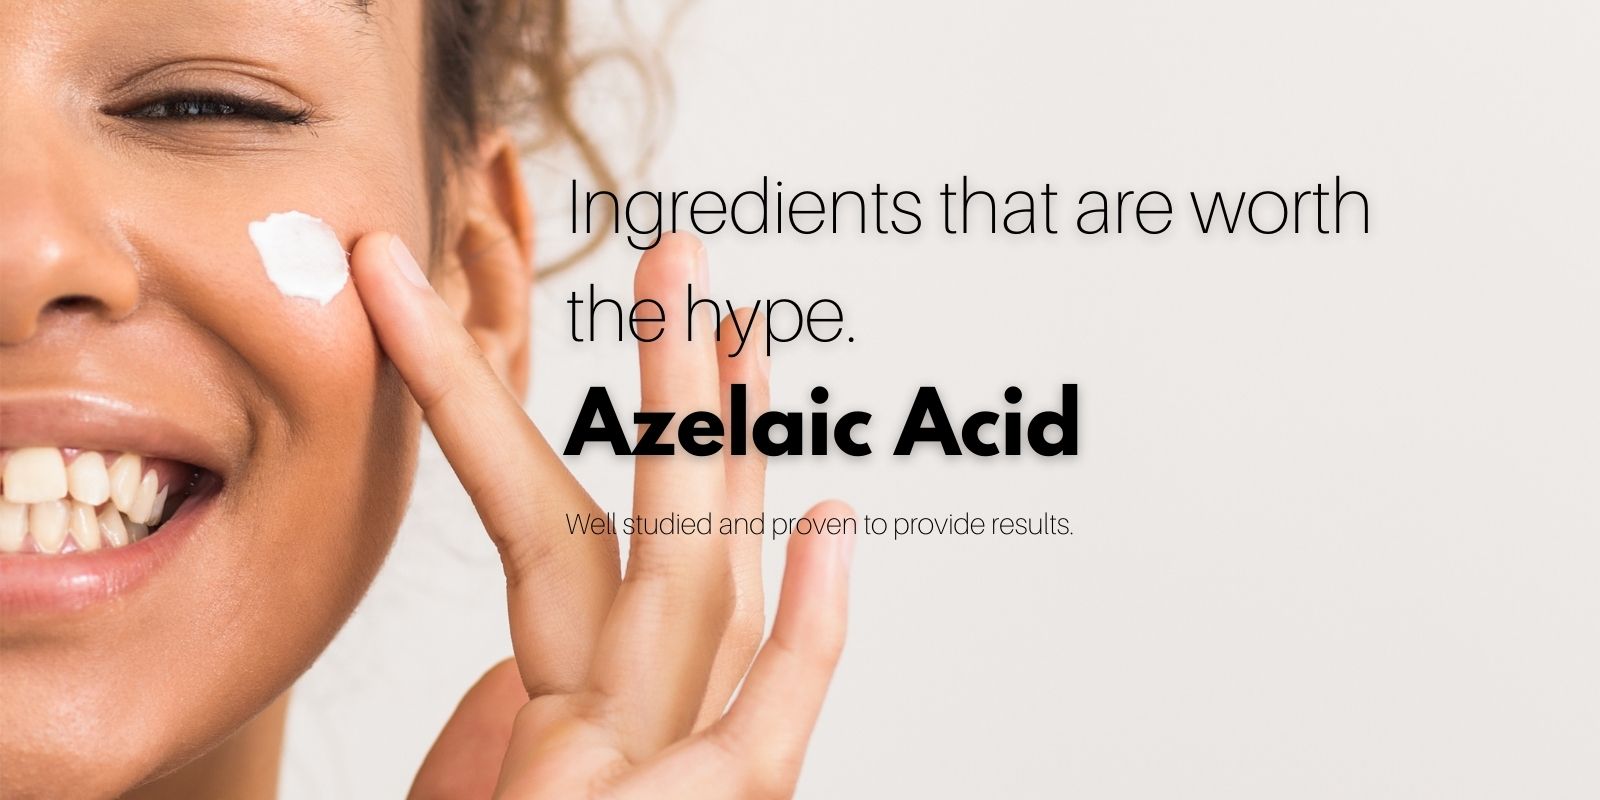 azelaic acid for skin rosacea, redness, acne, inflammation